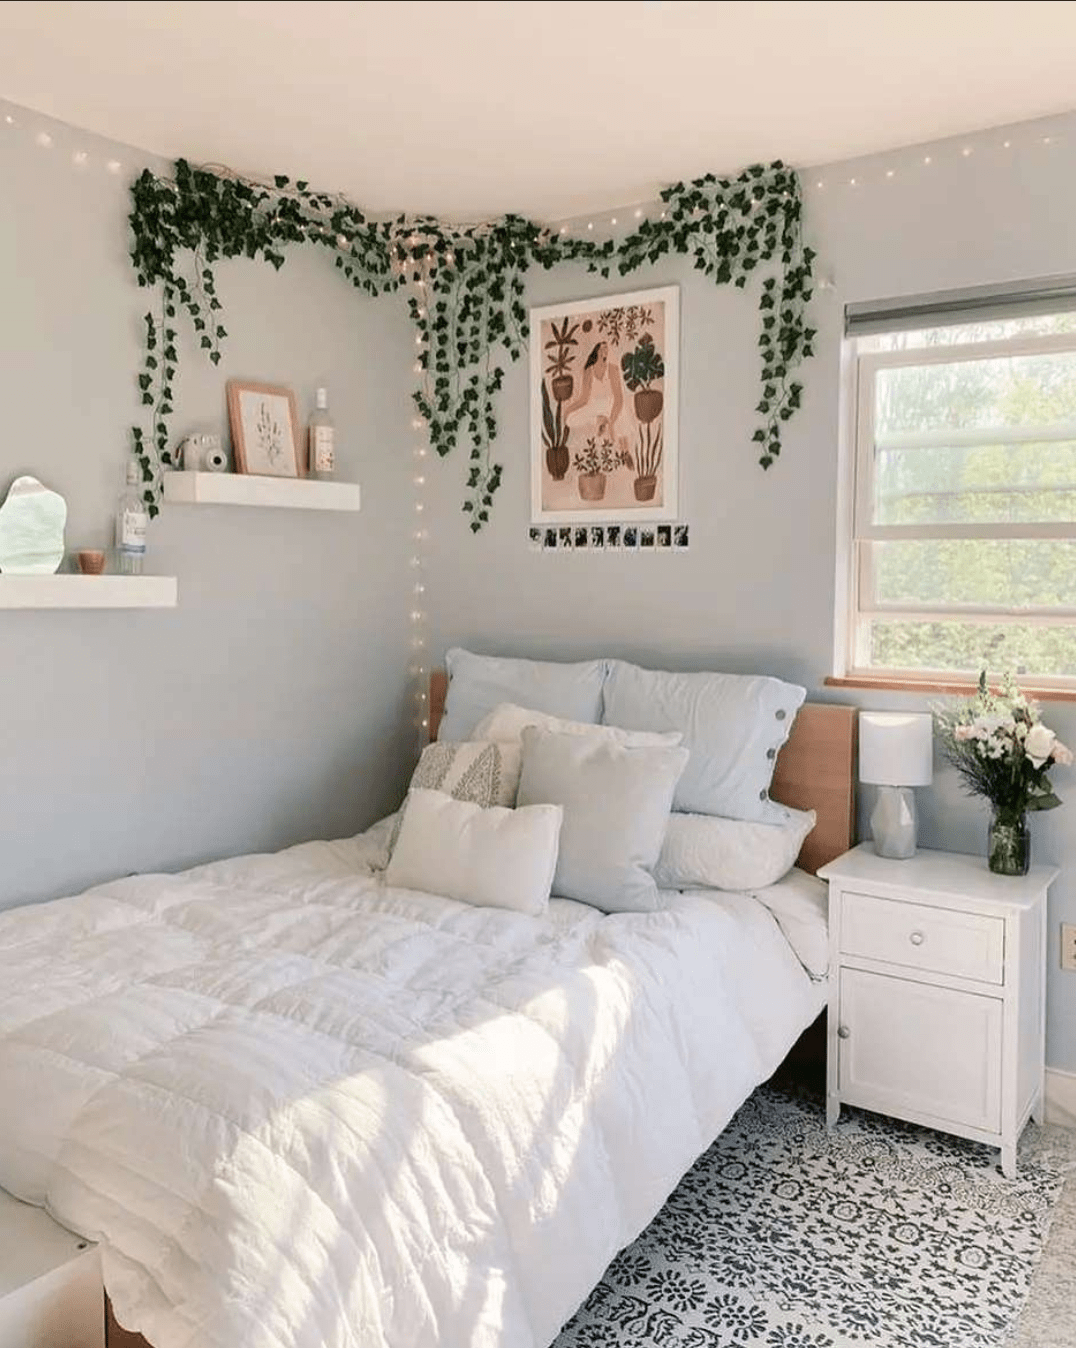 Dorm Room Decor Essentials For Stylish Students